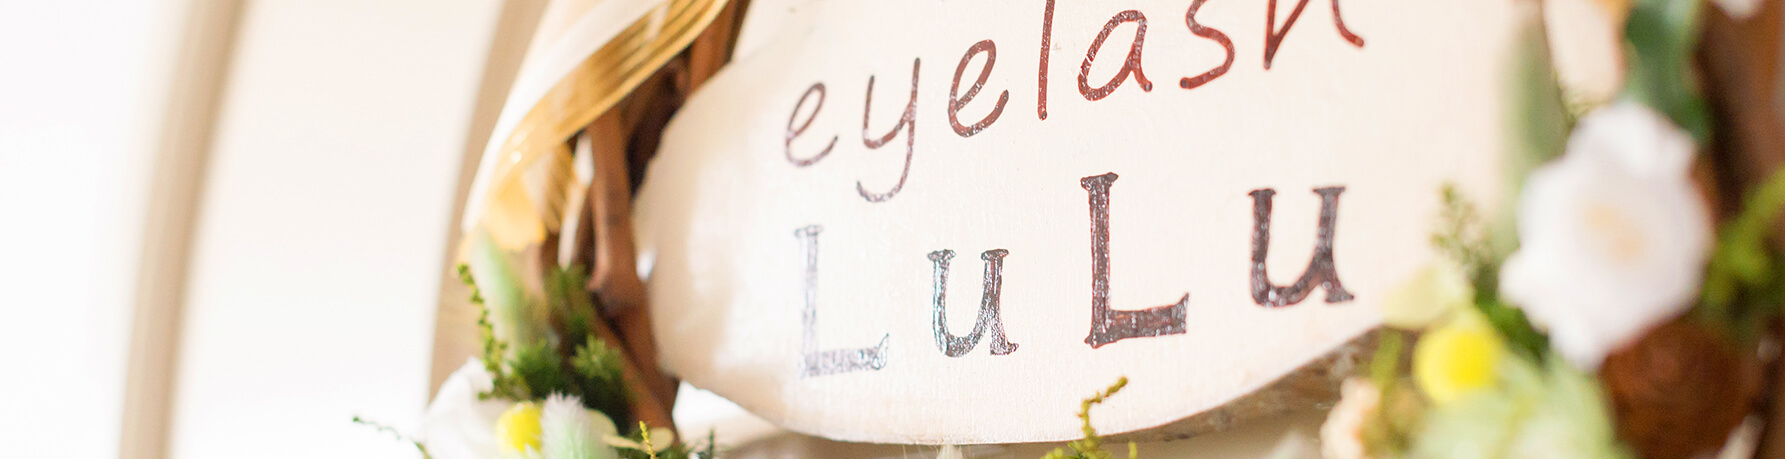 eyelash LuLu